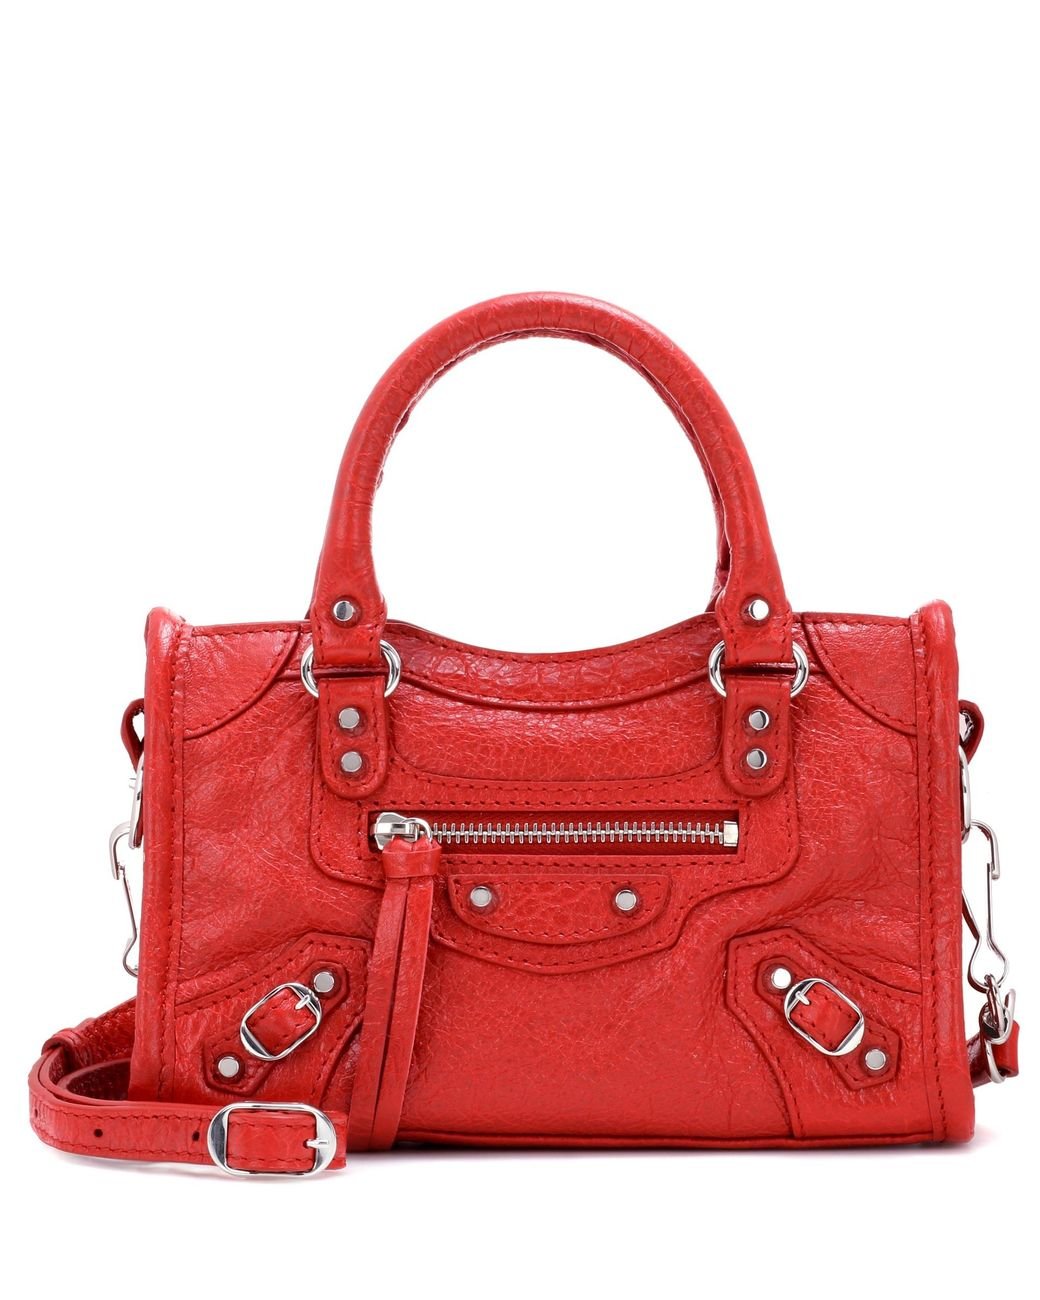 NWT 100% AUTH Balenciaga 115748 Red Leather Classic City Bag